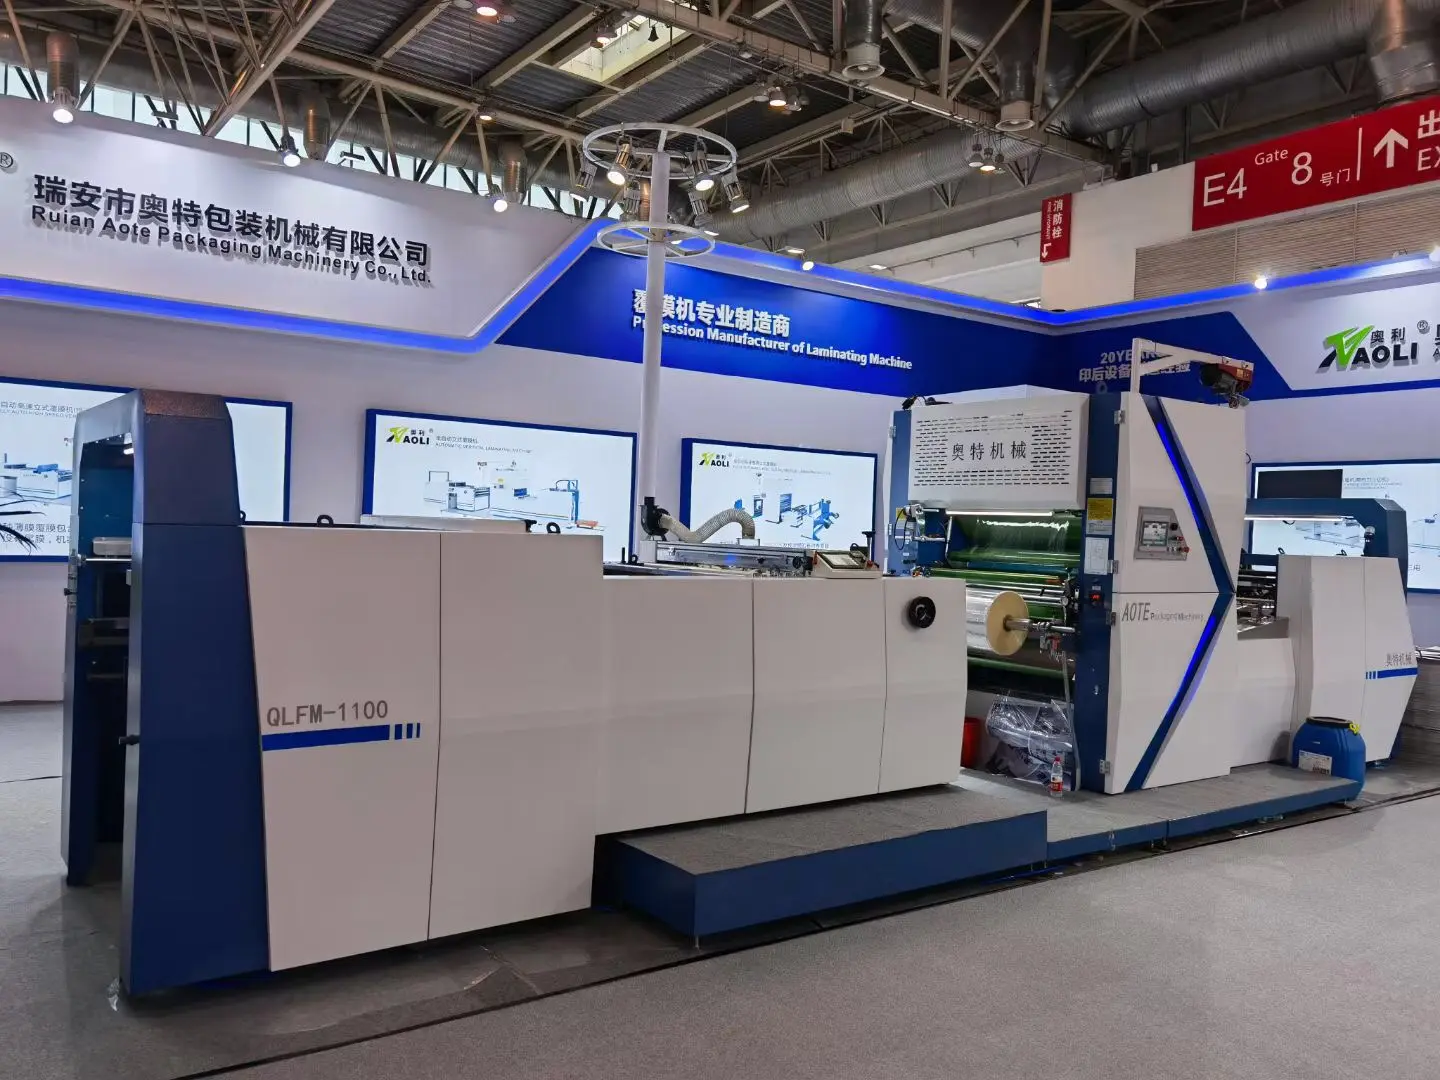 La décima Exposición Internacional de tecnología de impresión de Beijing concluyó con éxito